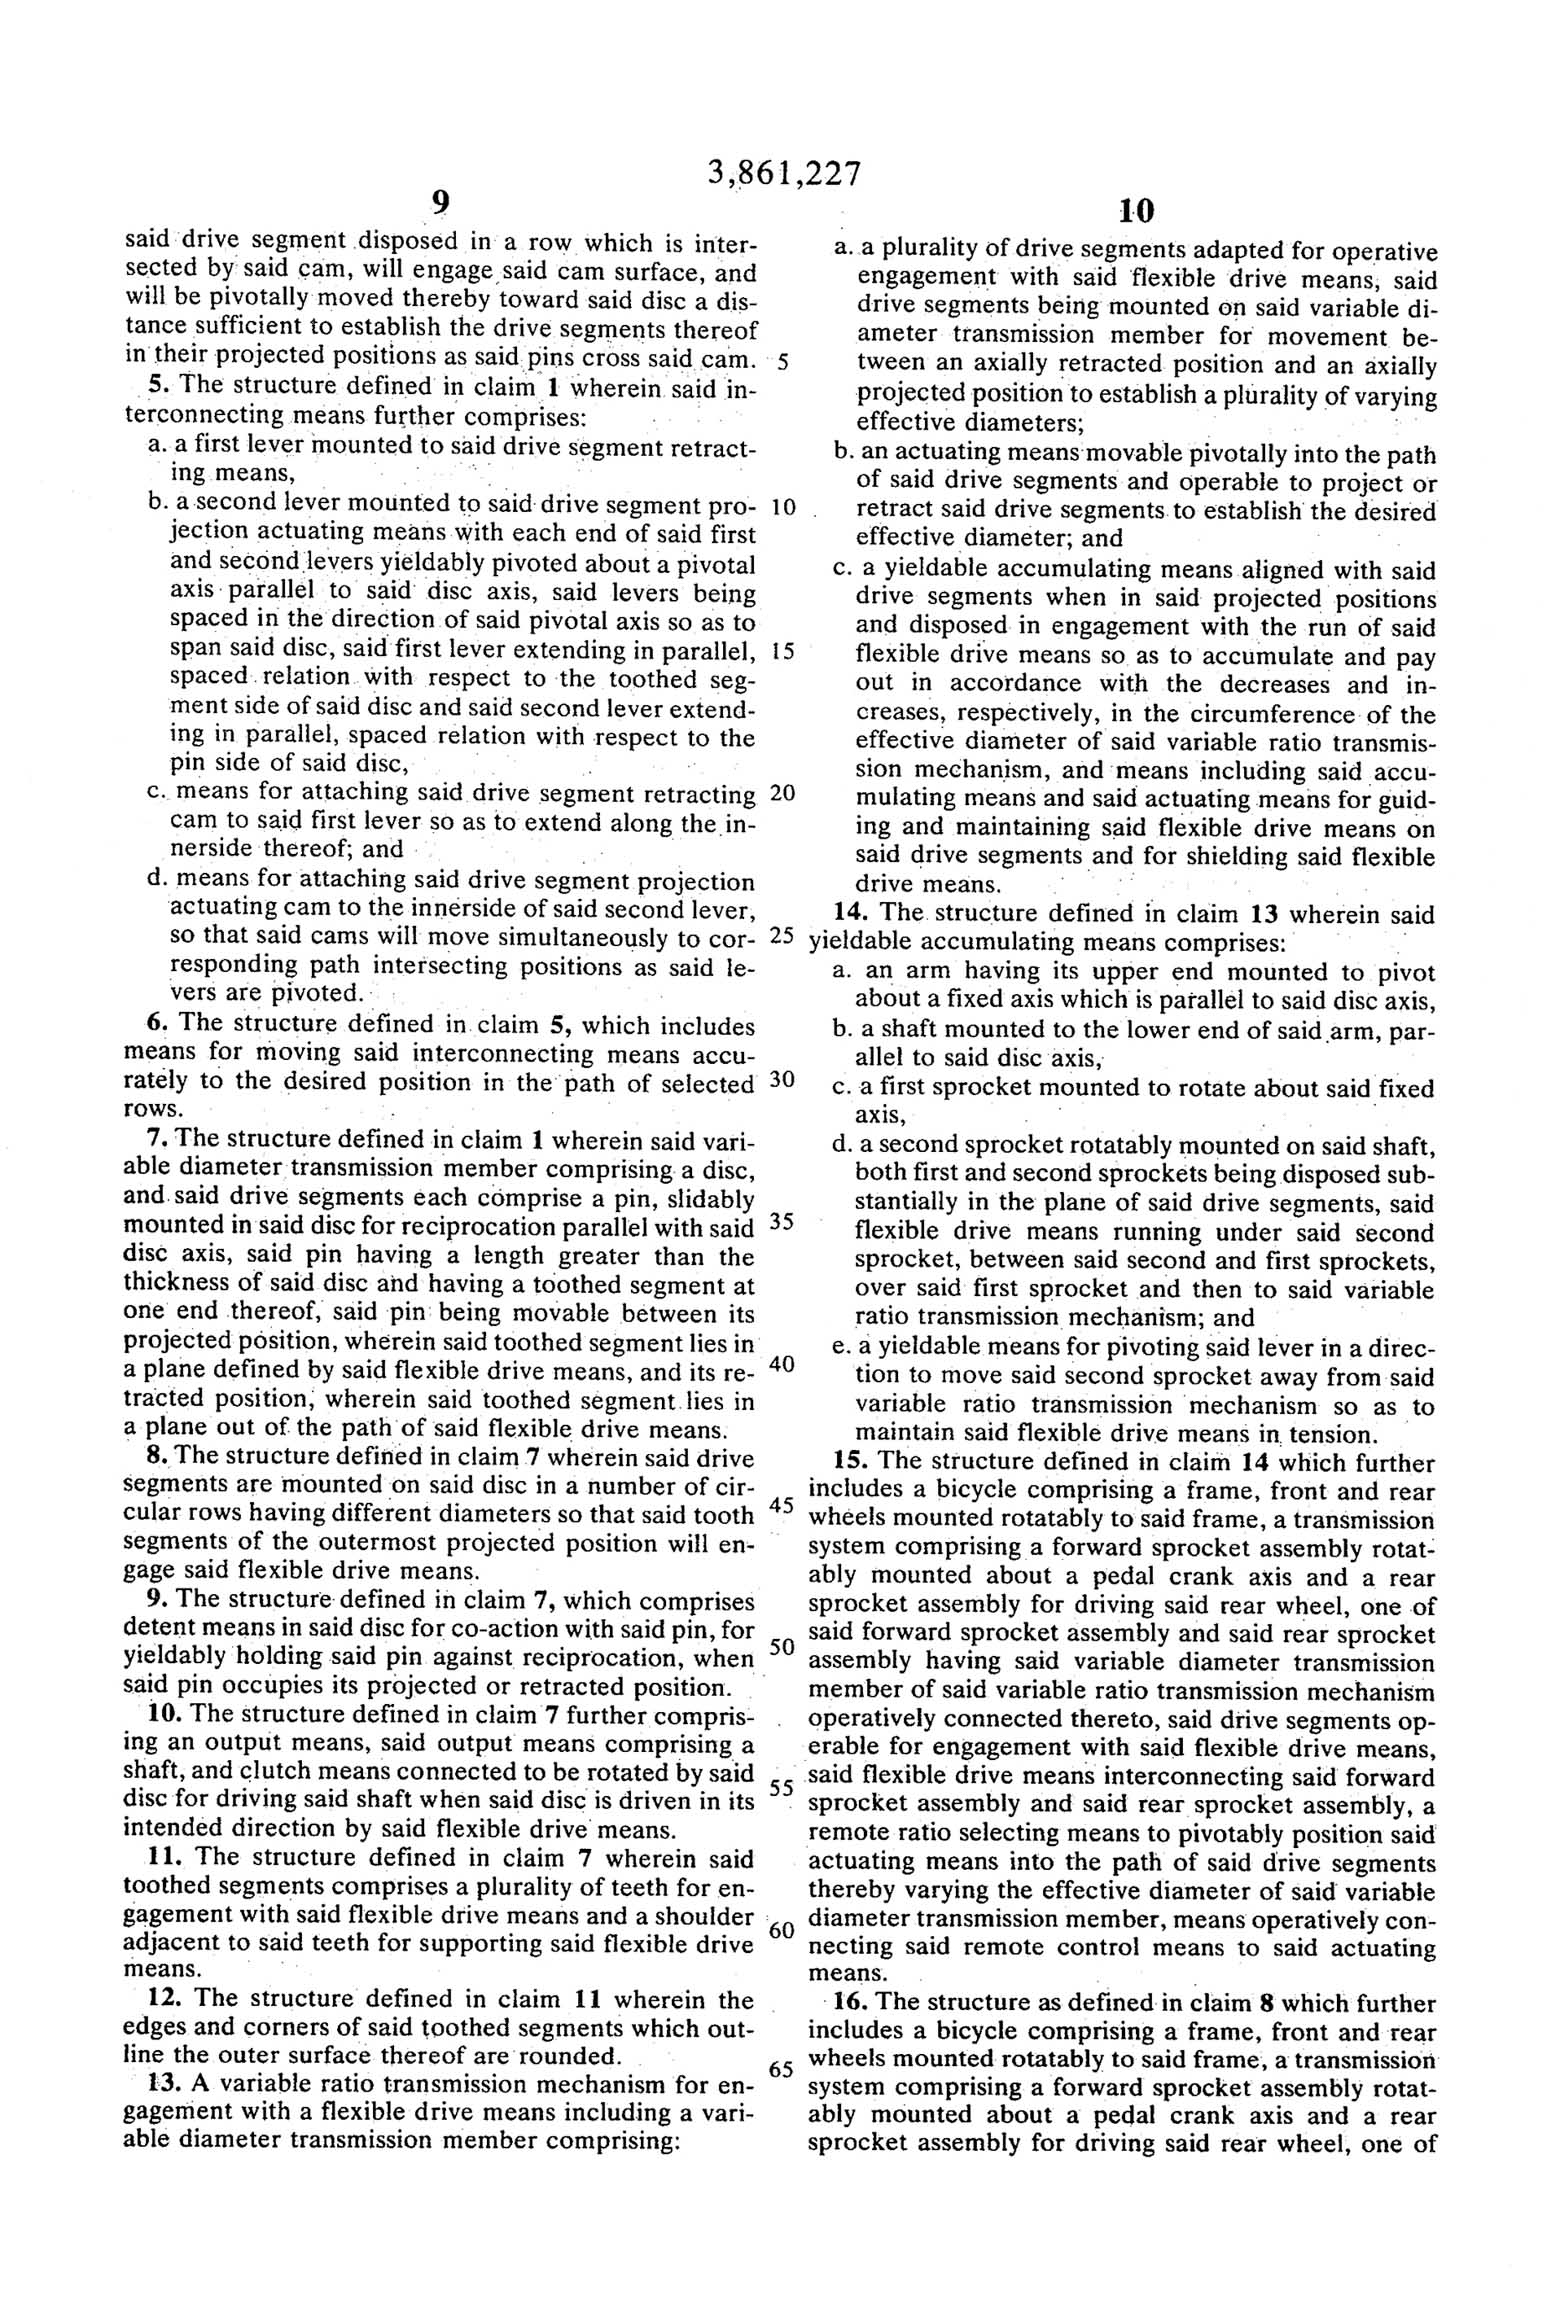 US Patent 3,861,227 - Tokheim scan 06 main image